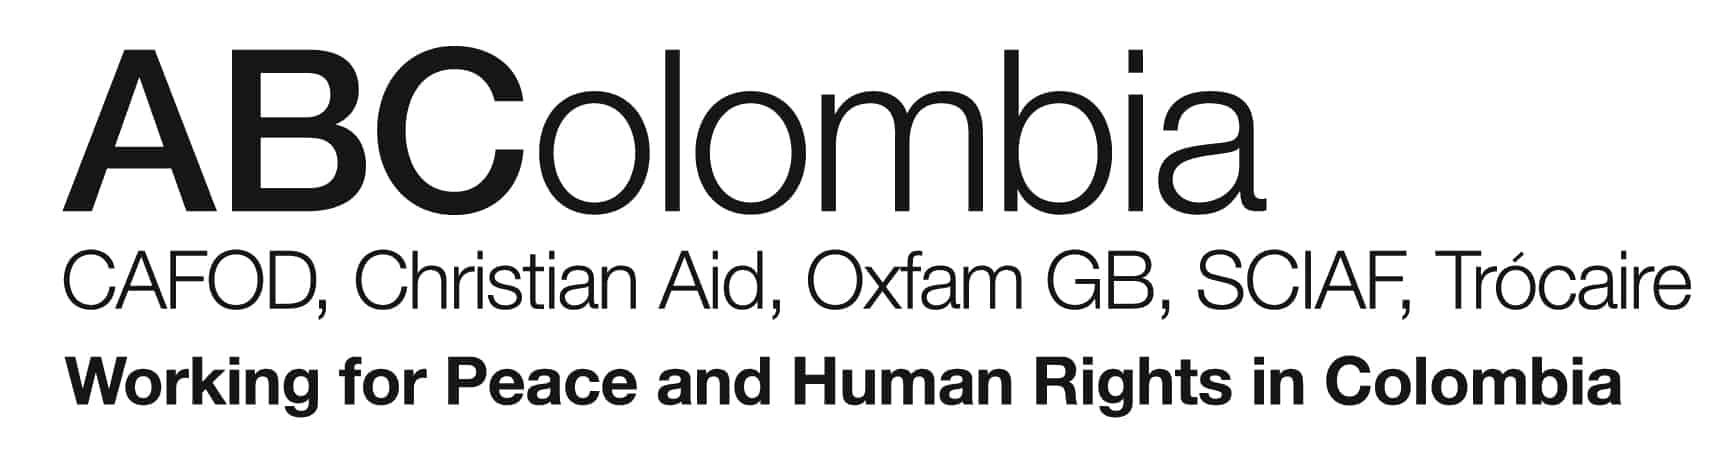 ABColombia logo_Black